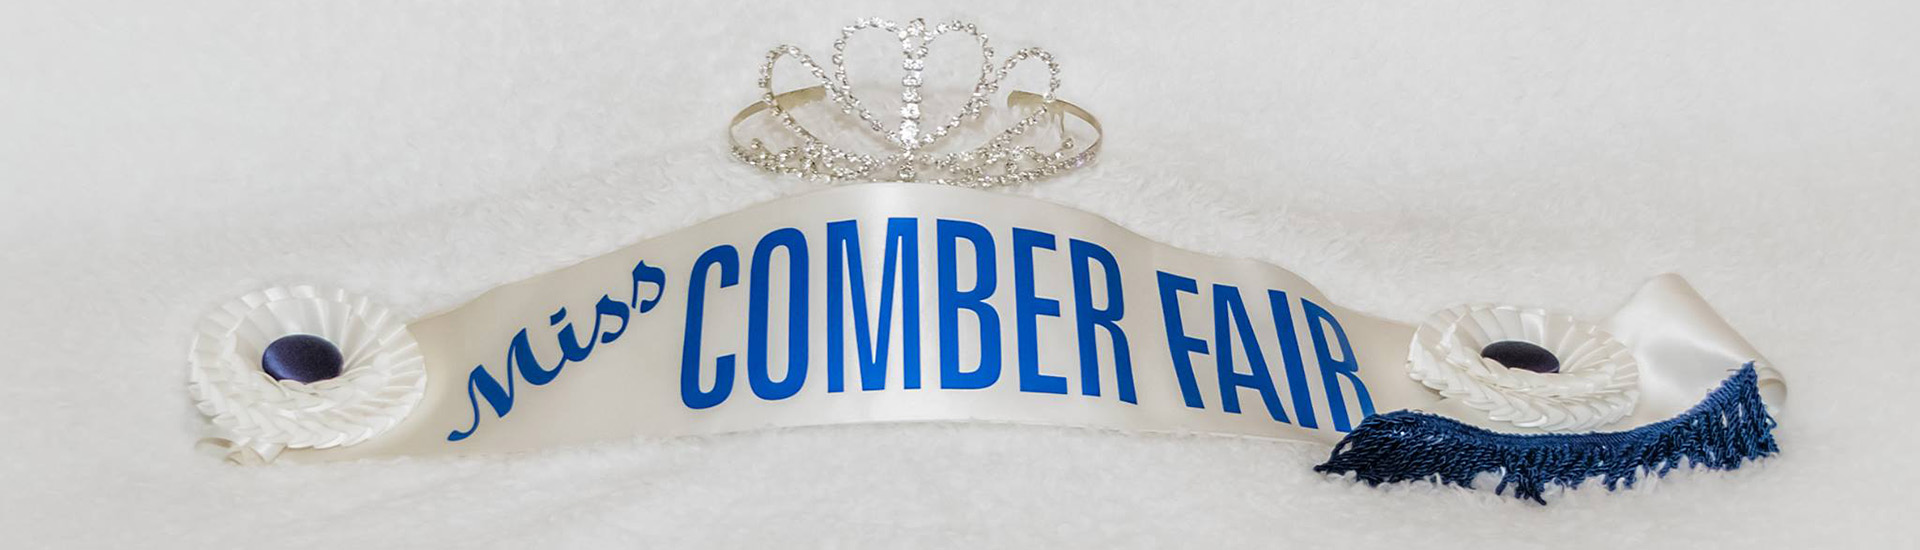 Miss Comber Fair 2018